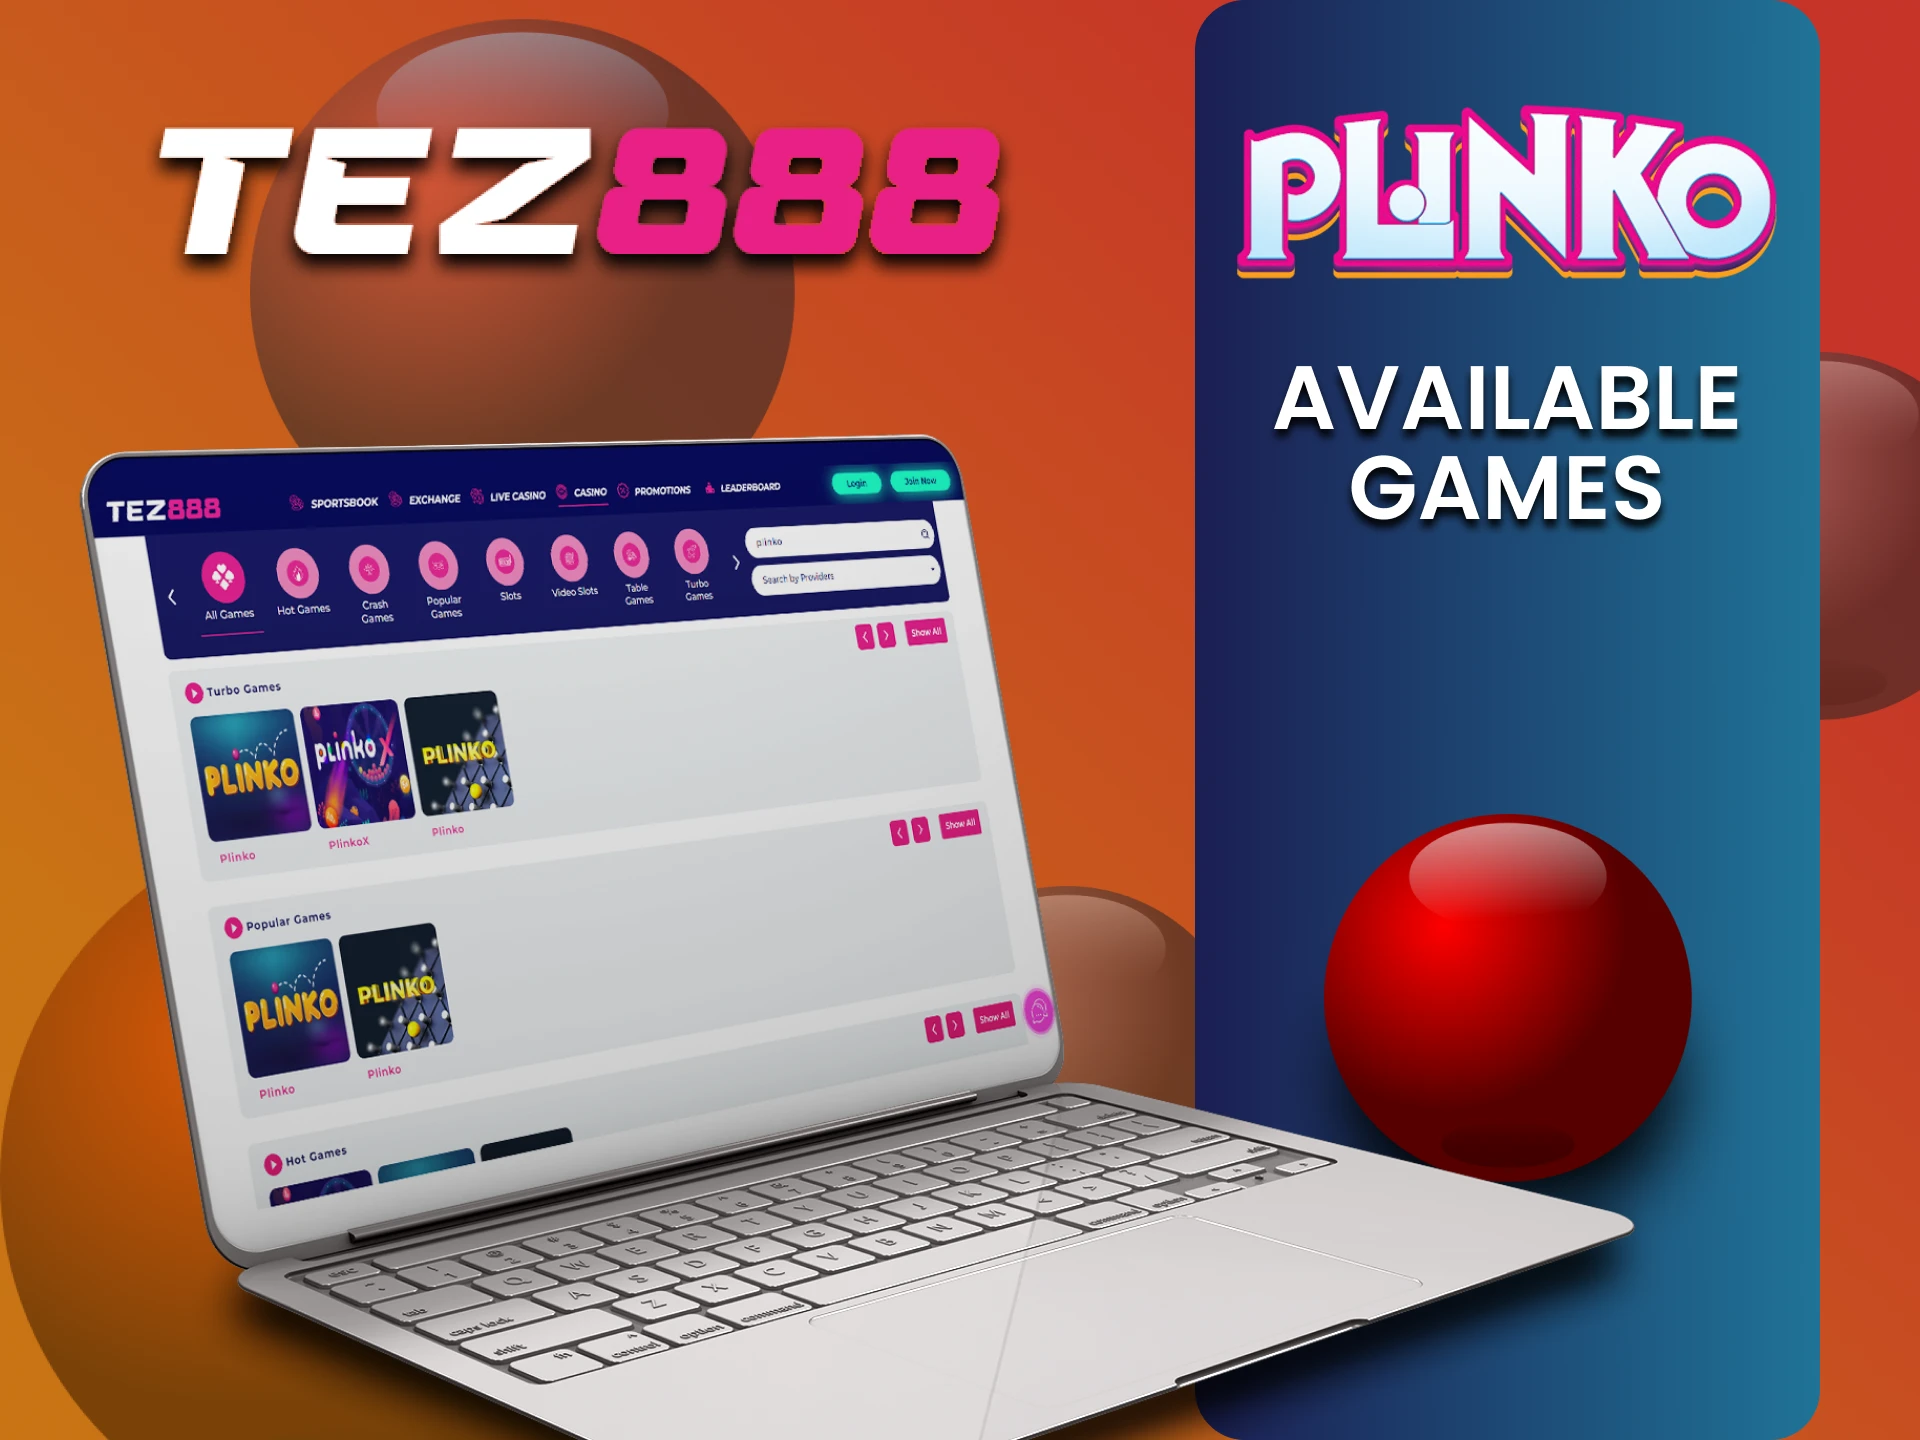 Choose your version of Plinko game on Tez888.